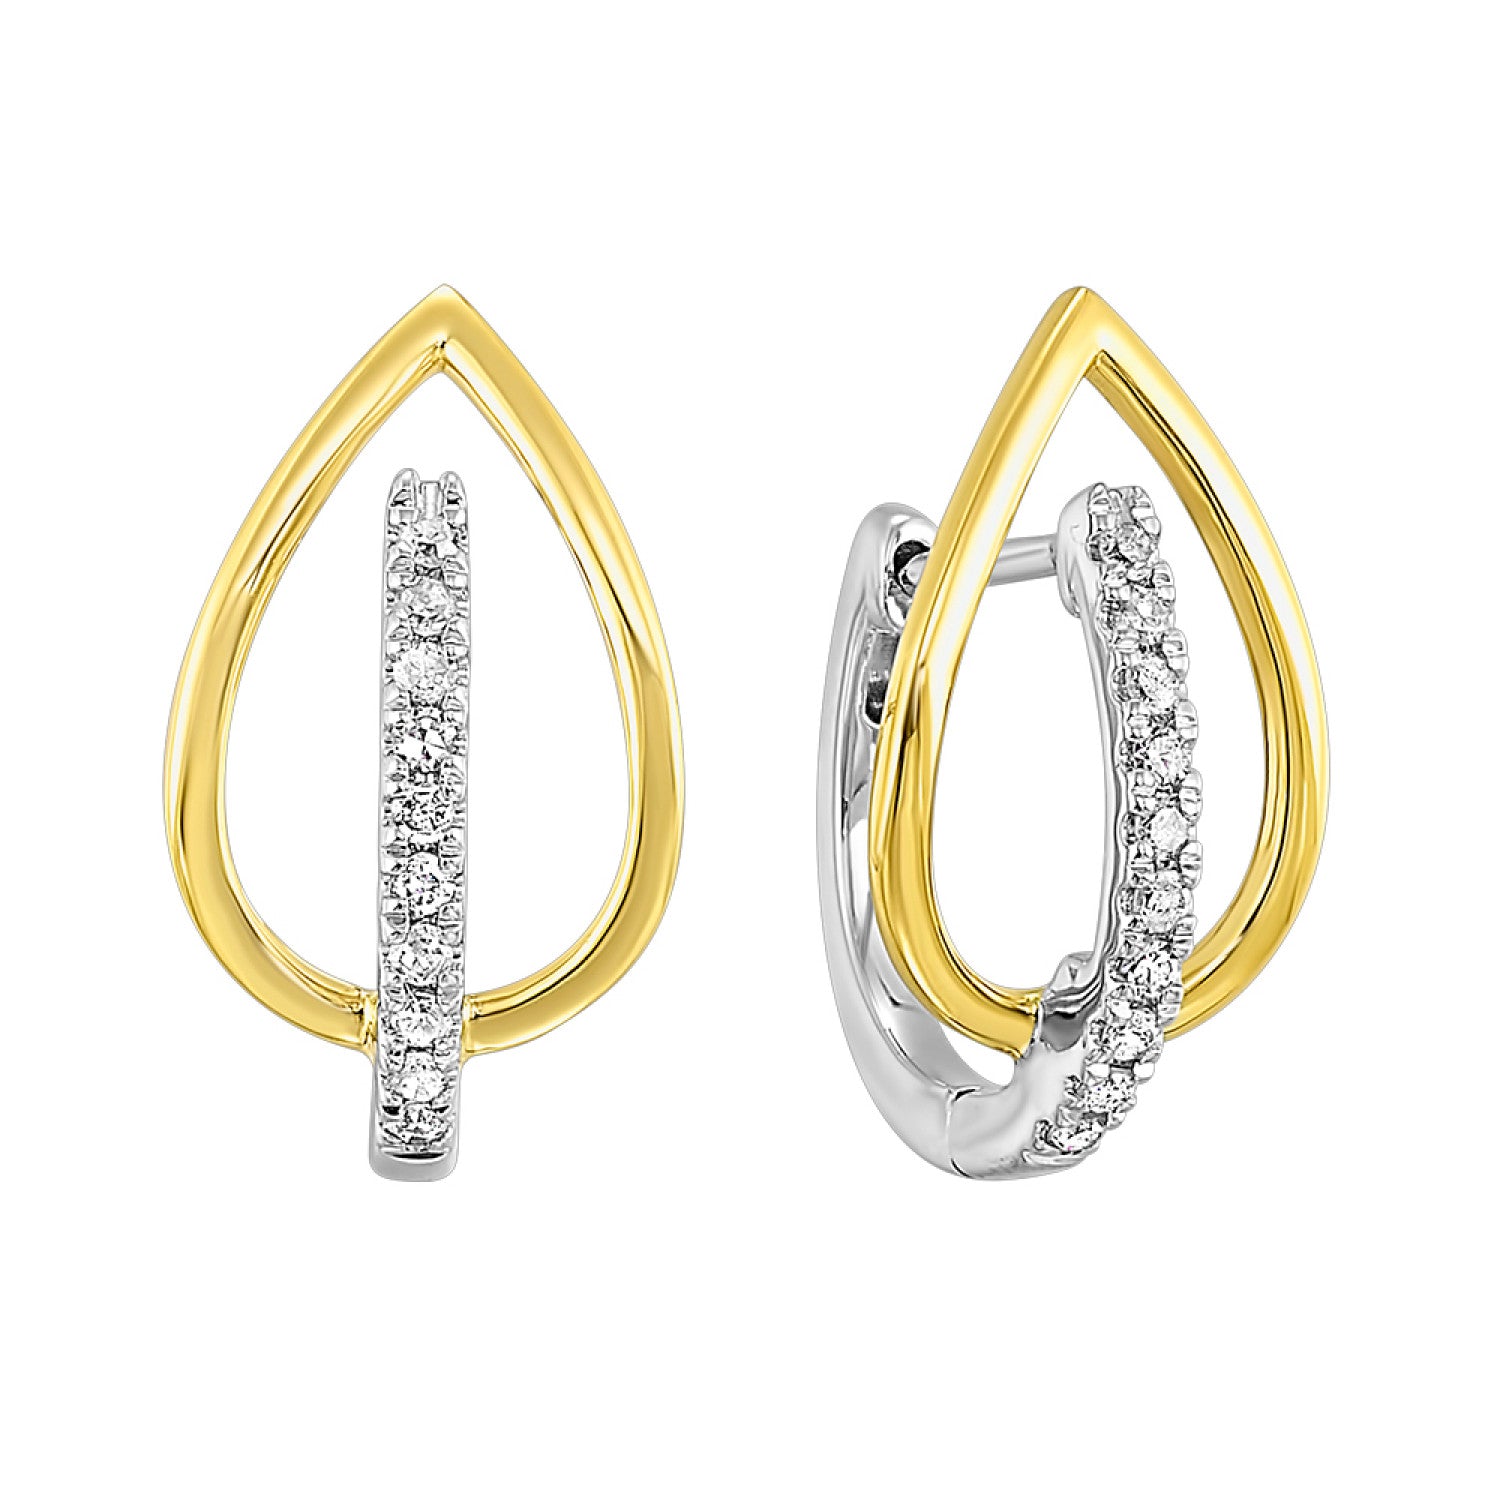 Buy Floral Majestic Diamond Earrings Online - Zaveribros